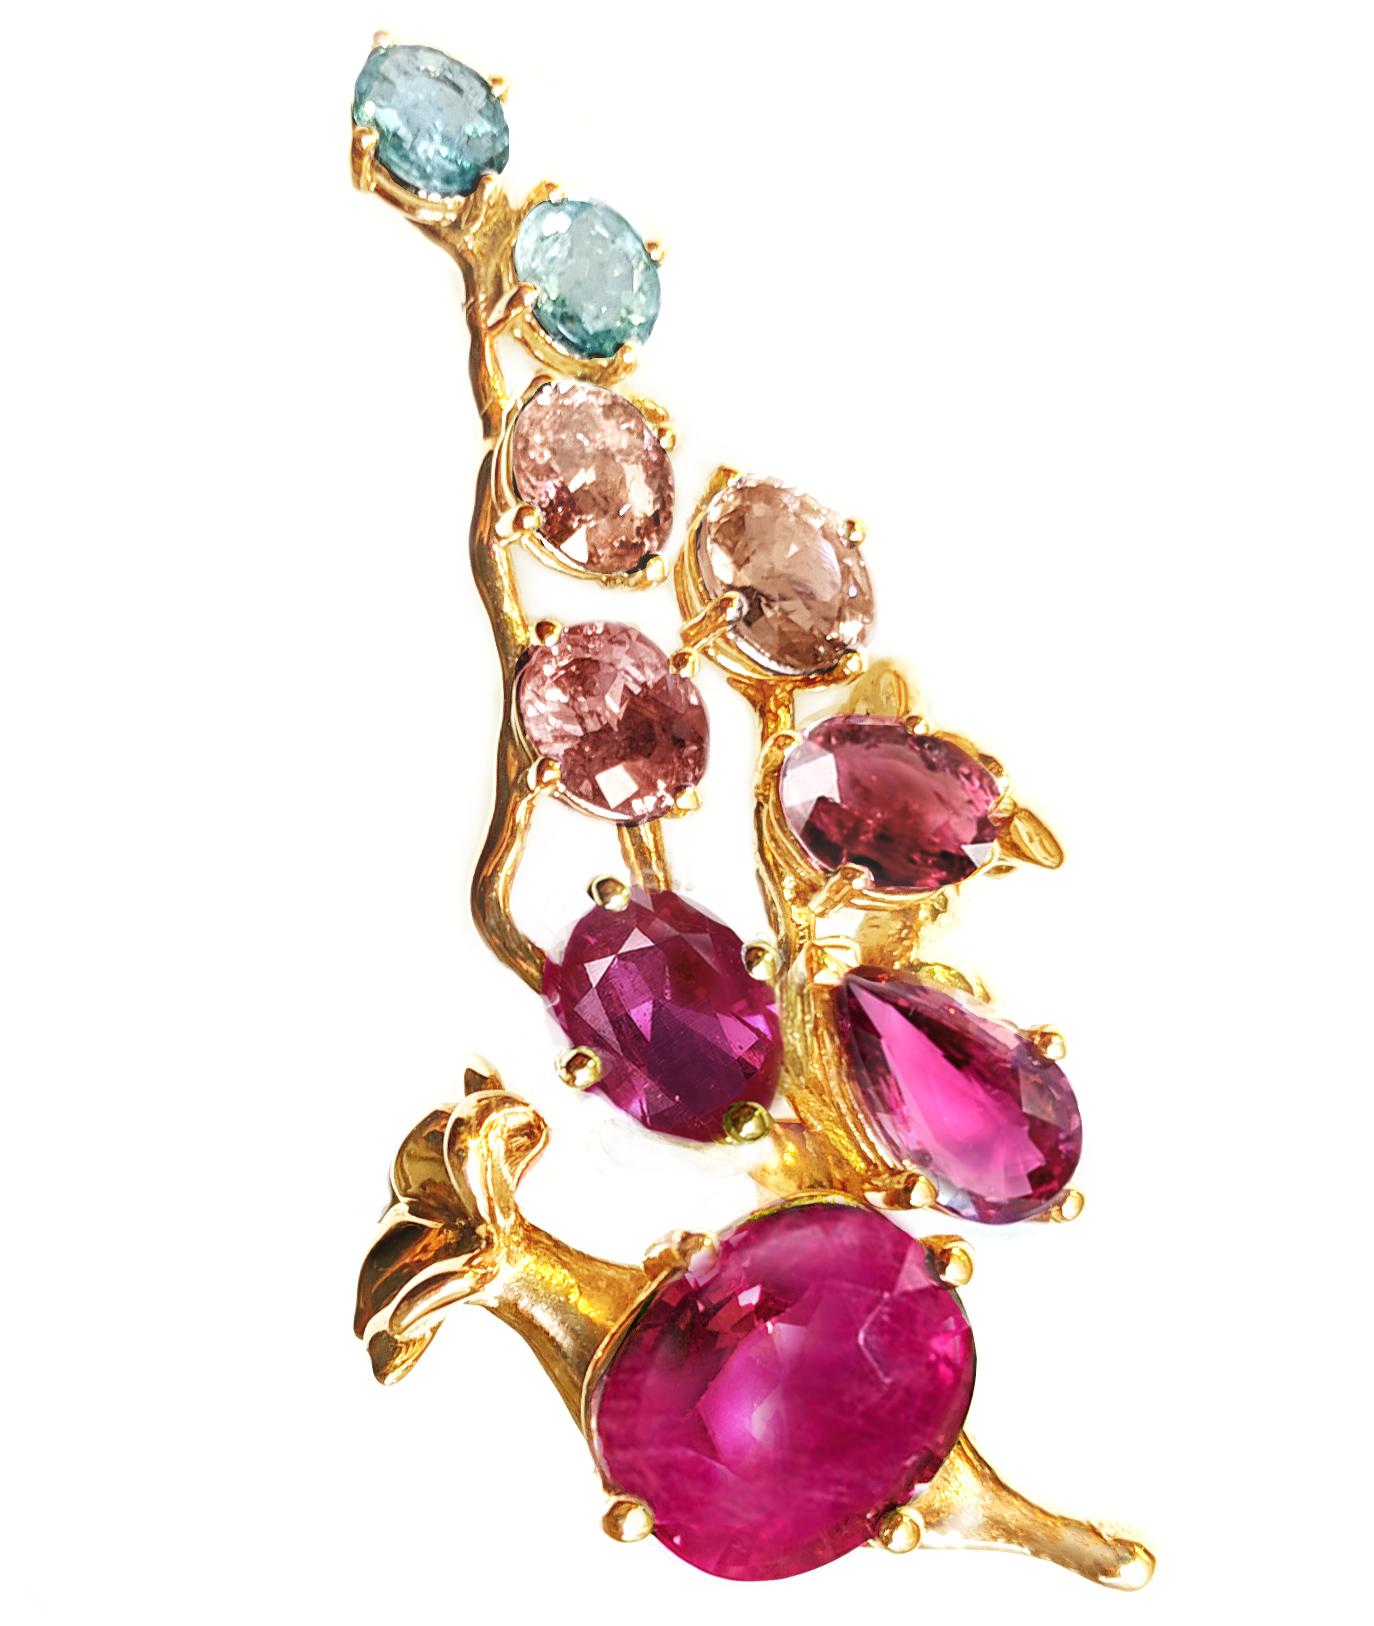 Eighteen Karat Yellow Gold Pink Sapphires Brooch with Rubies and Malaya Garnets For Sale 1